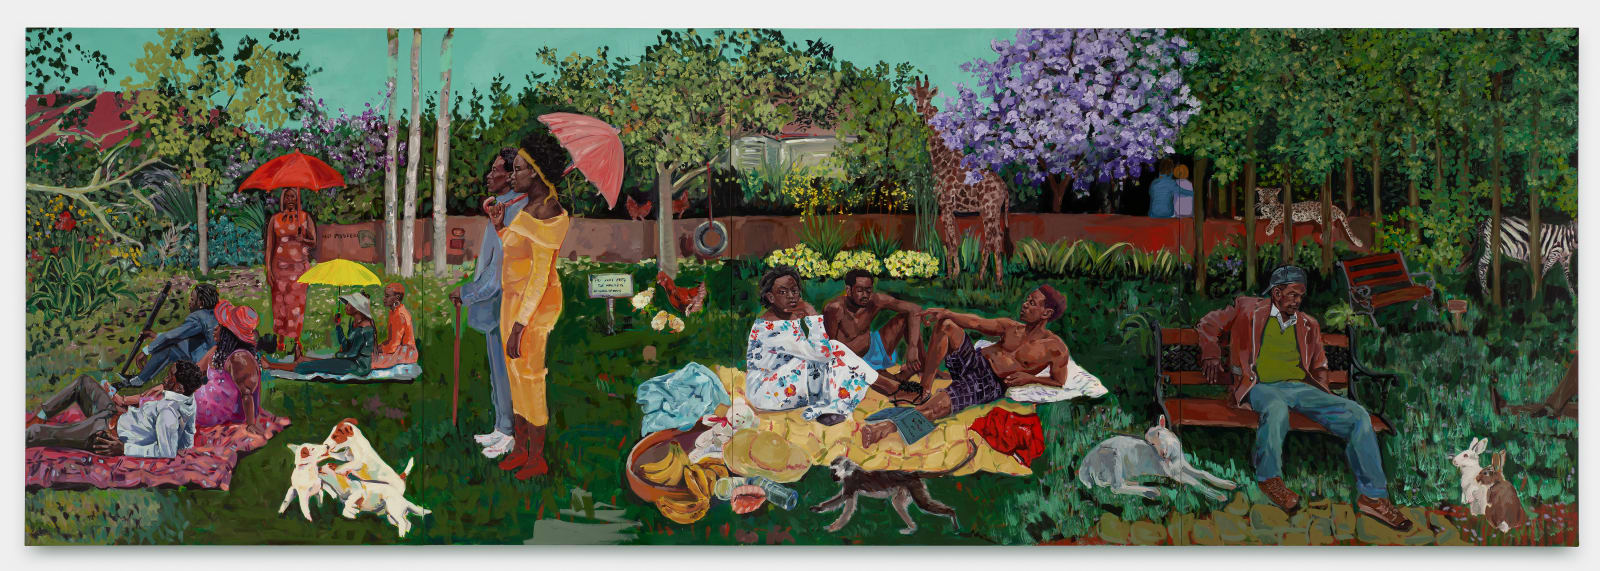 Wangari Mathenge, Home Sweet Home (After Seurat, Manet and Pippin), 2023